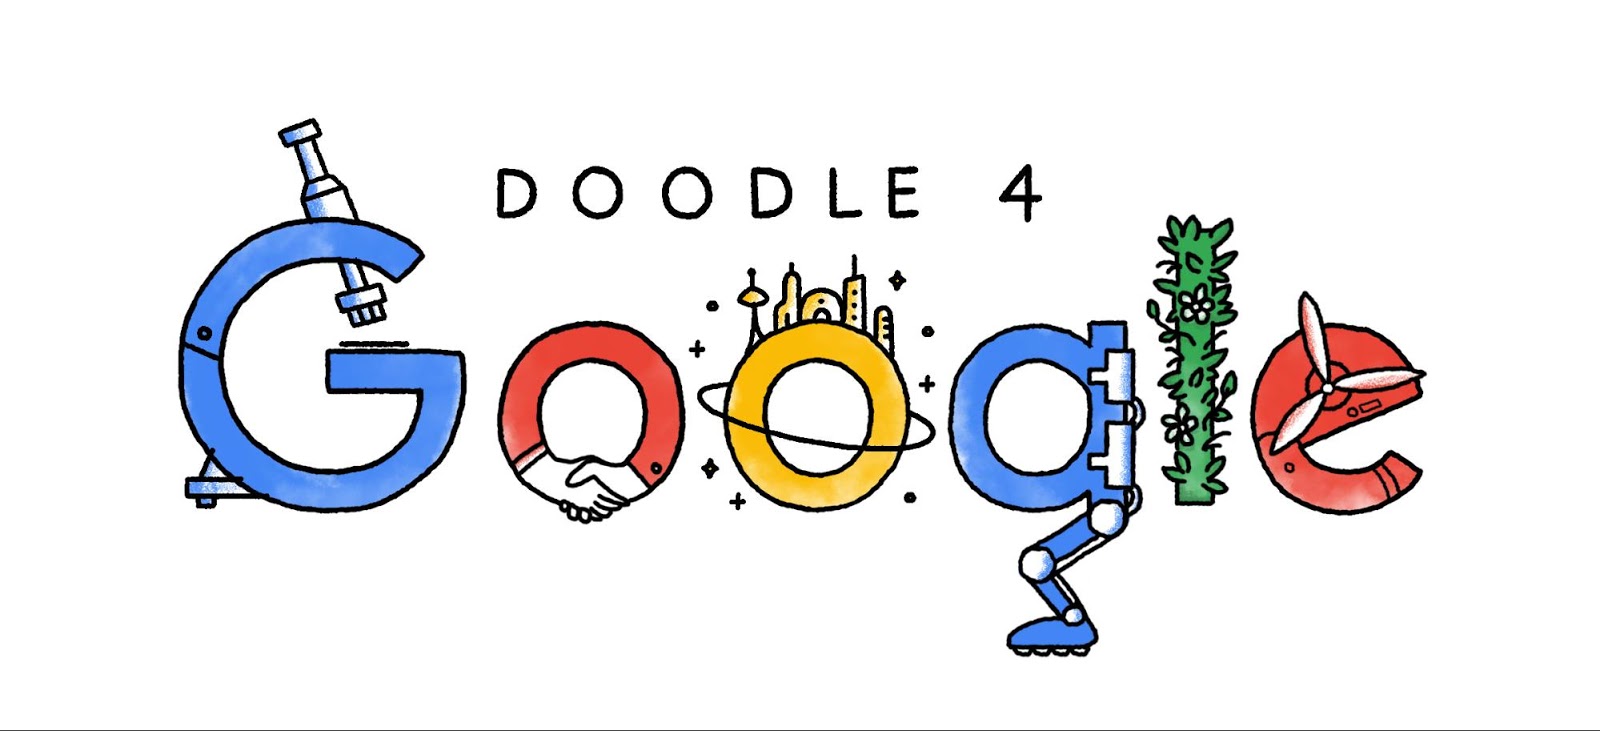 Official Google Blog Announcing The 2009 Doodle 4 Google Winner